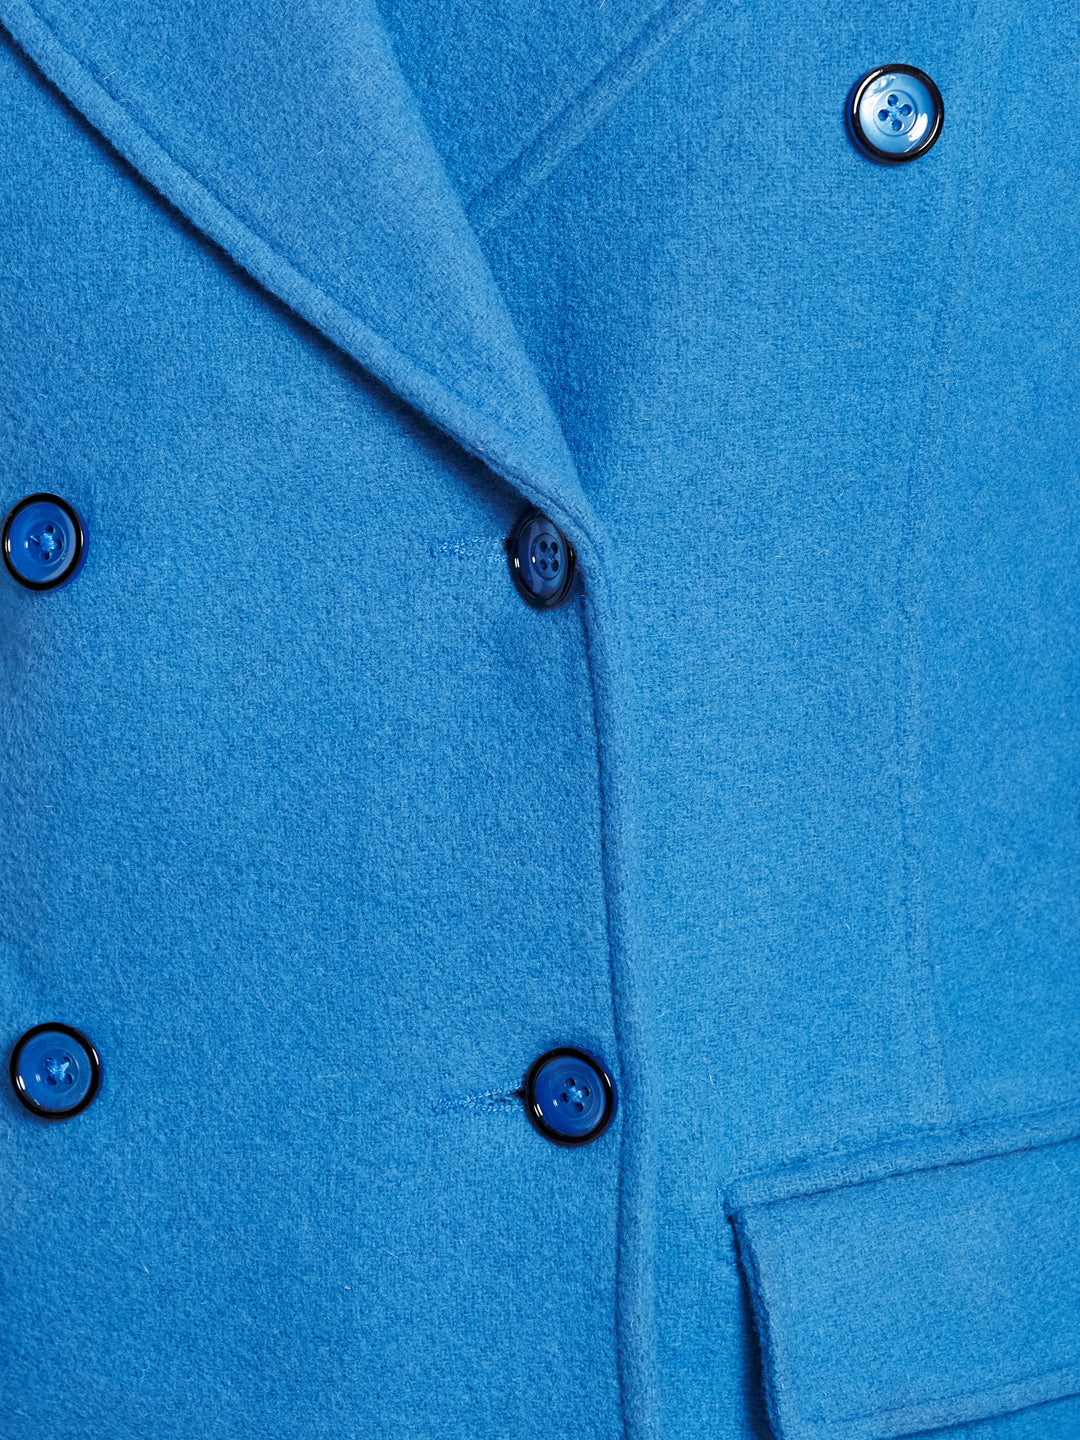 Newark Blue Wool blend Trench Coat